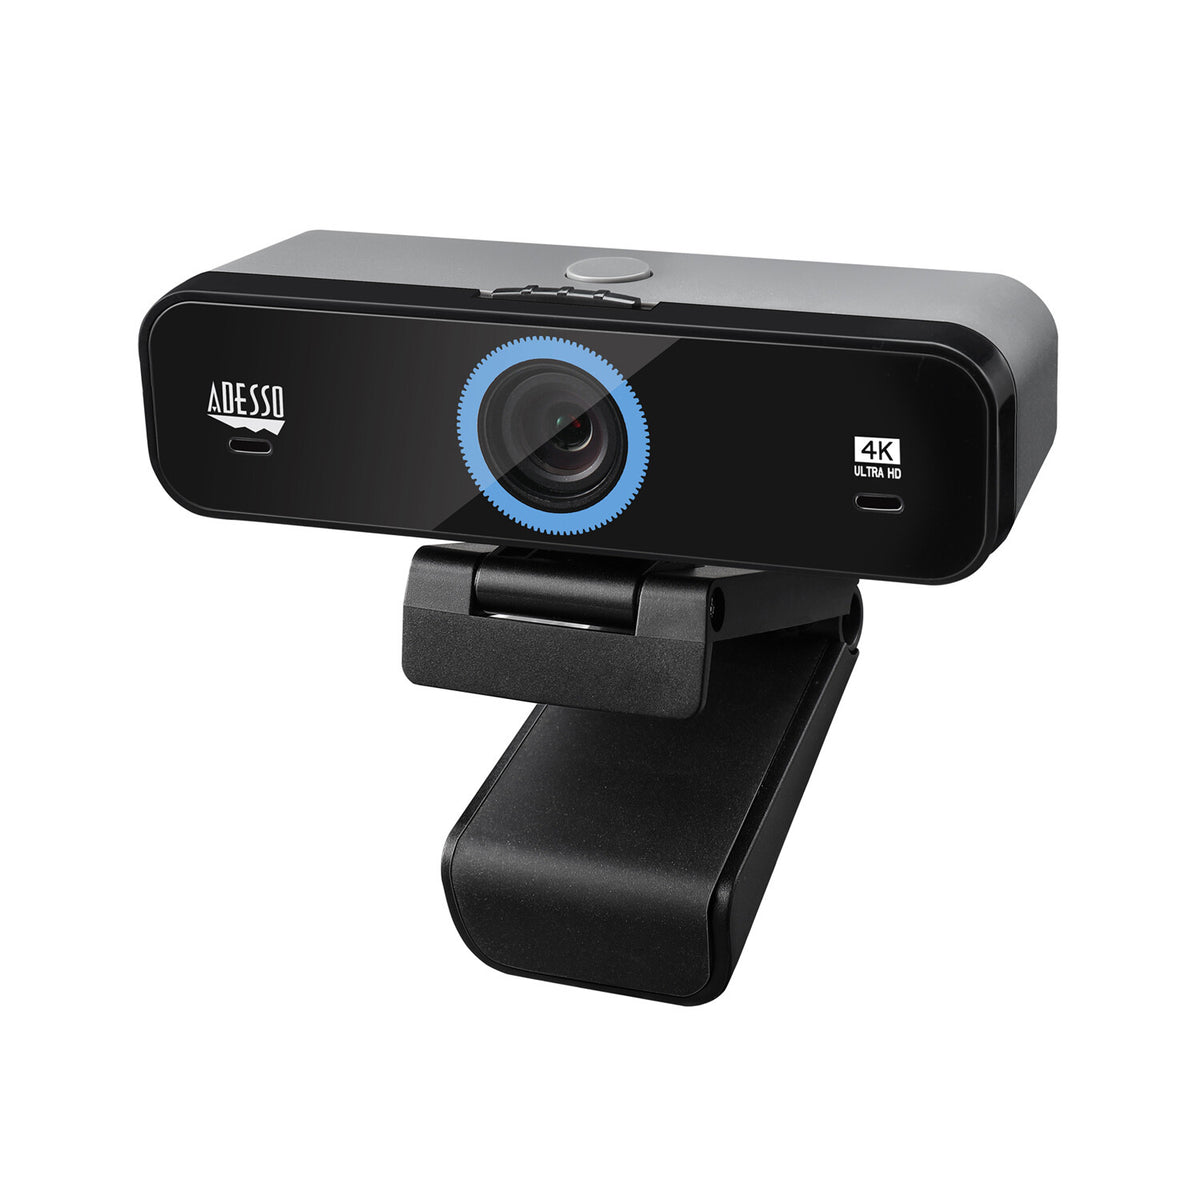 Adesso CyberTrack K4 - 8 MP 3840 x 2160p USB 2.0 webcam in Black